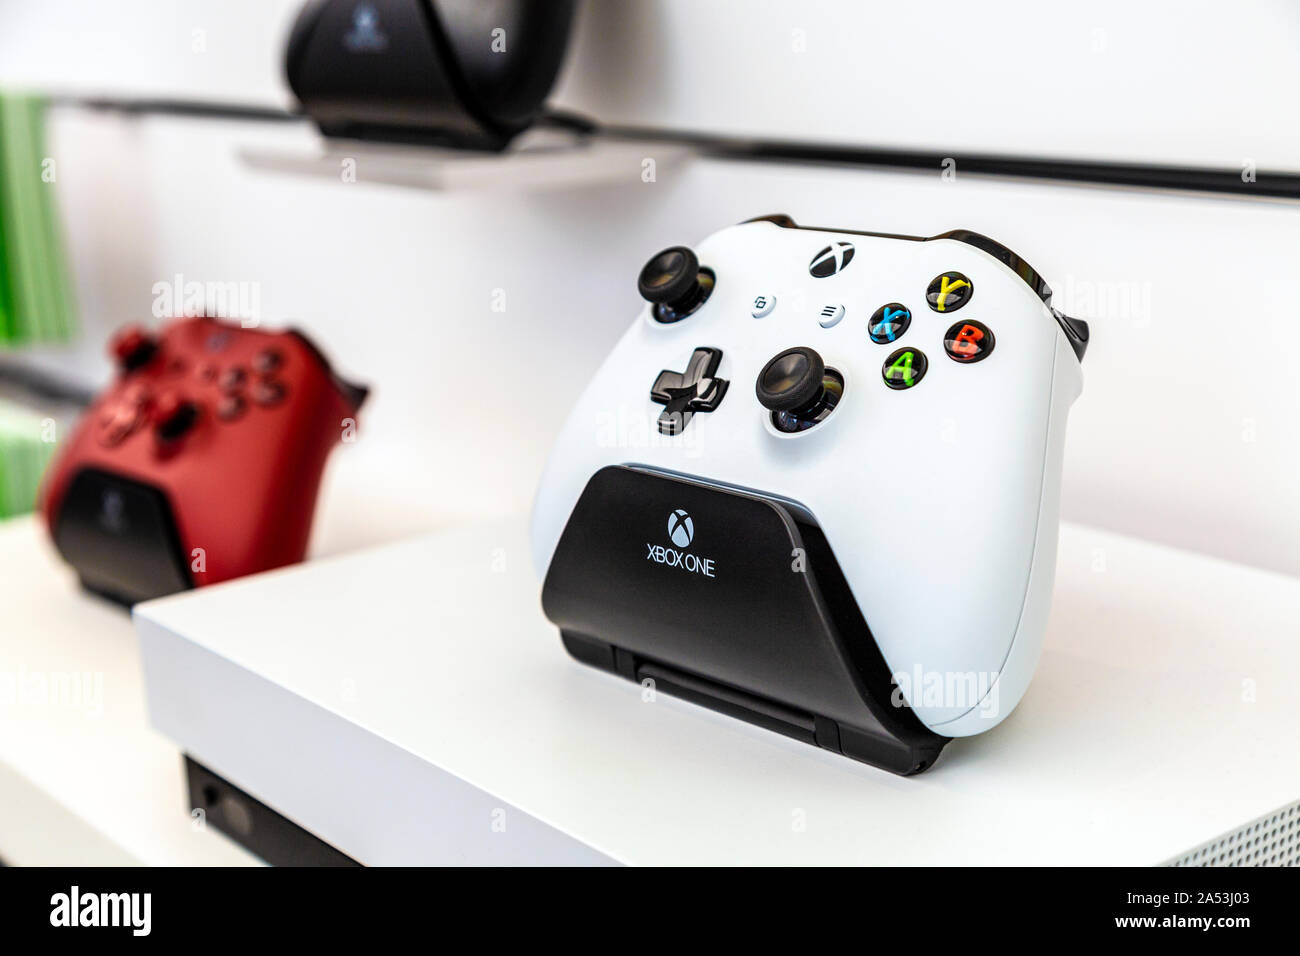 Xbox un controlador inalámbrico en la Microsoft store en Oxford Circus, London, UK Foto de stock